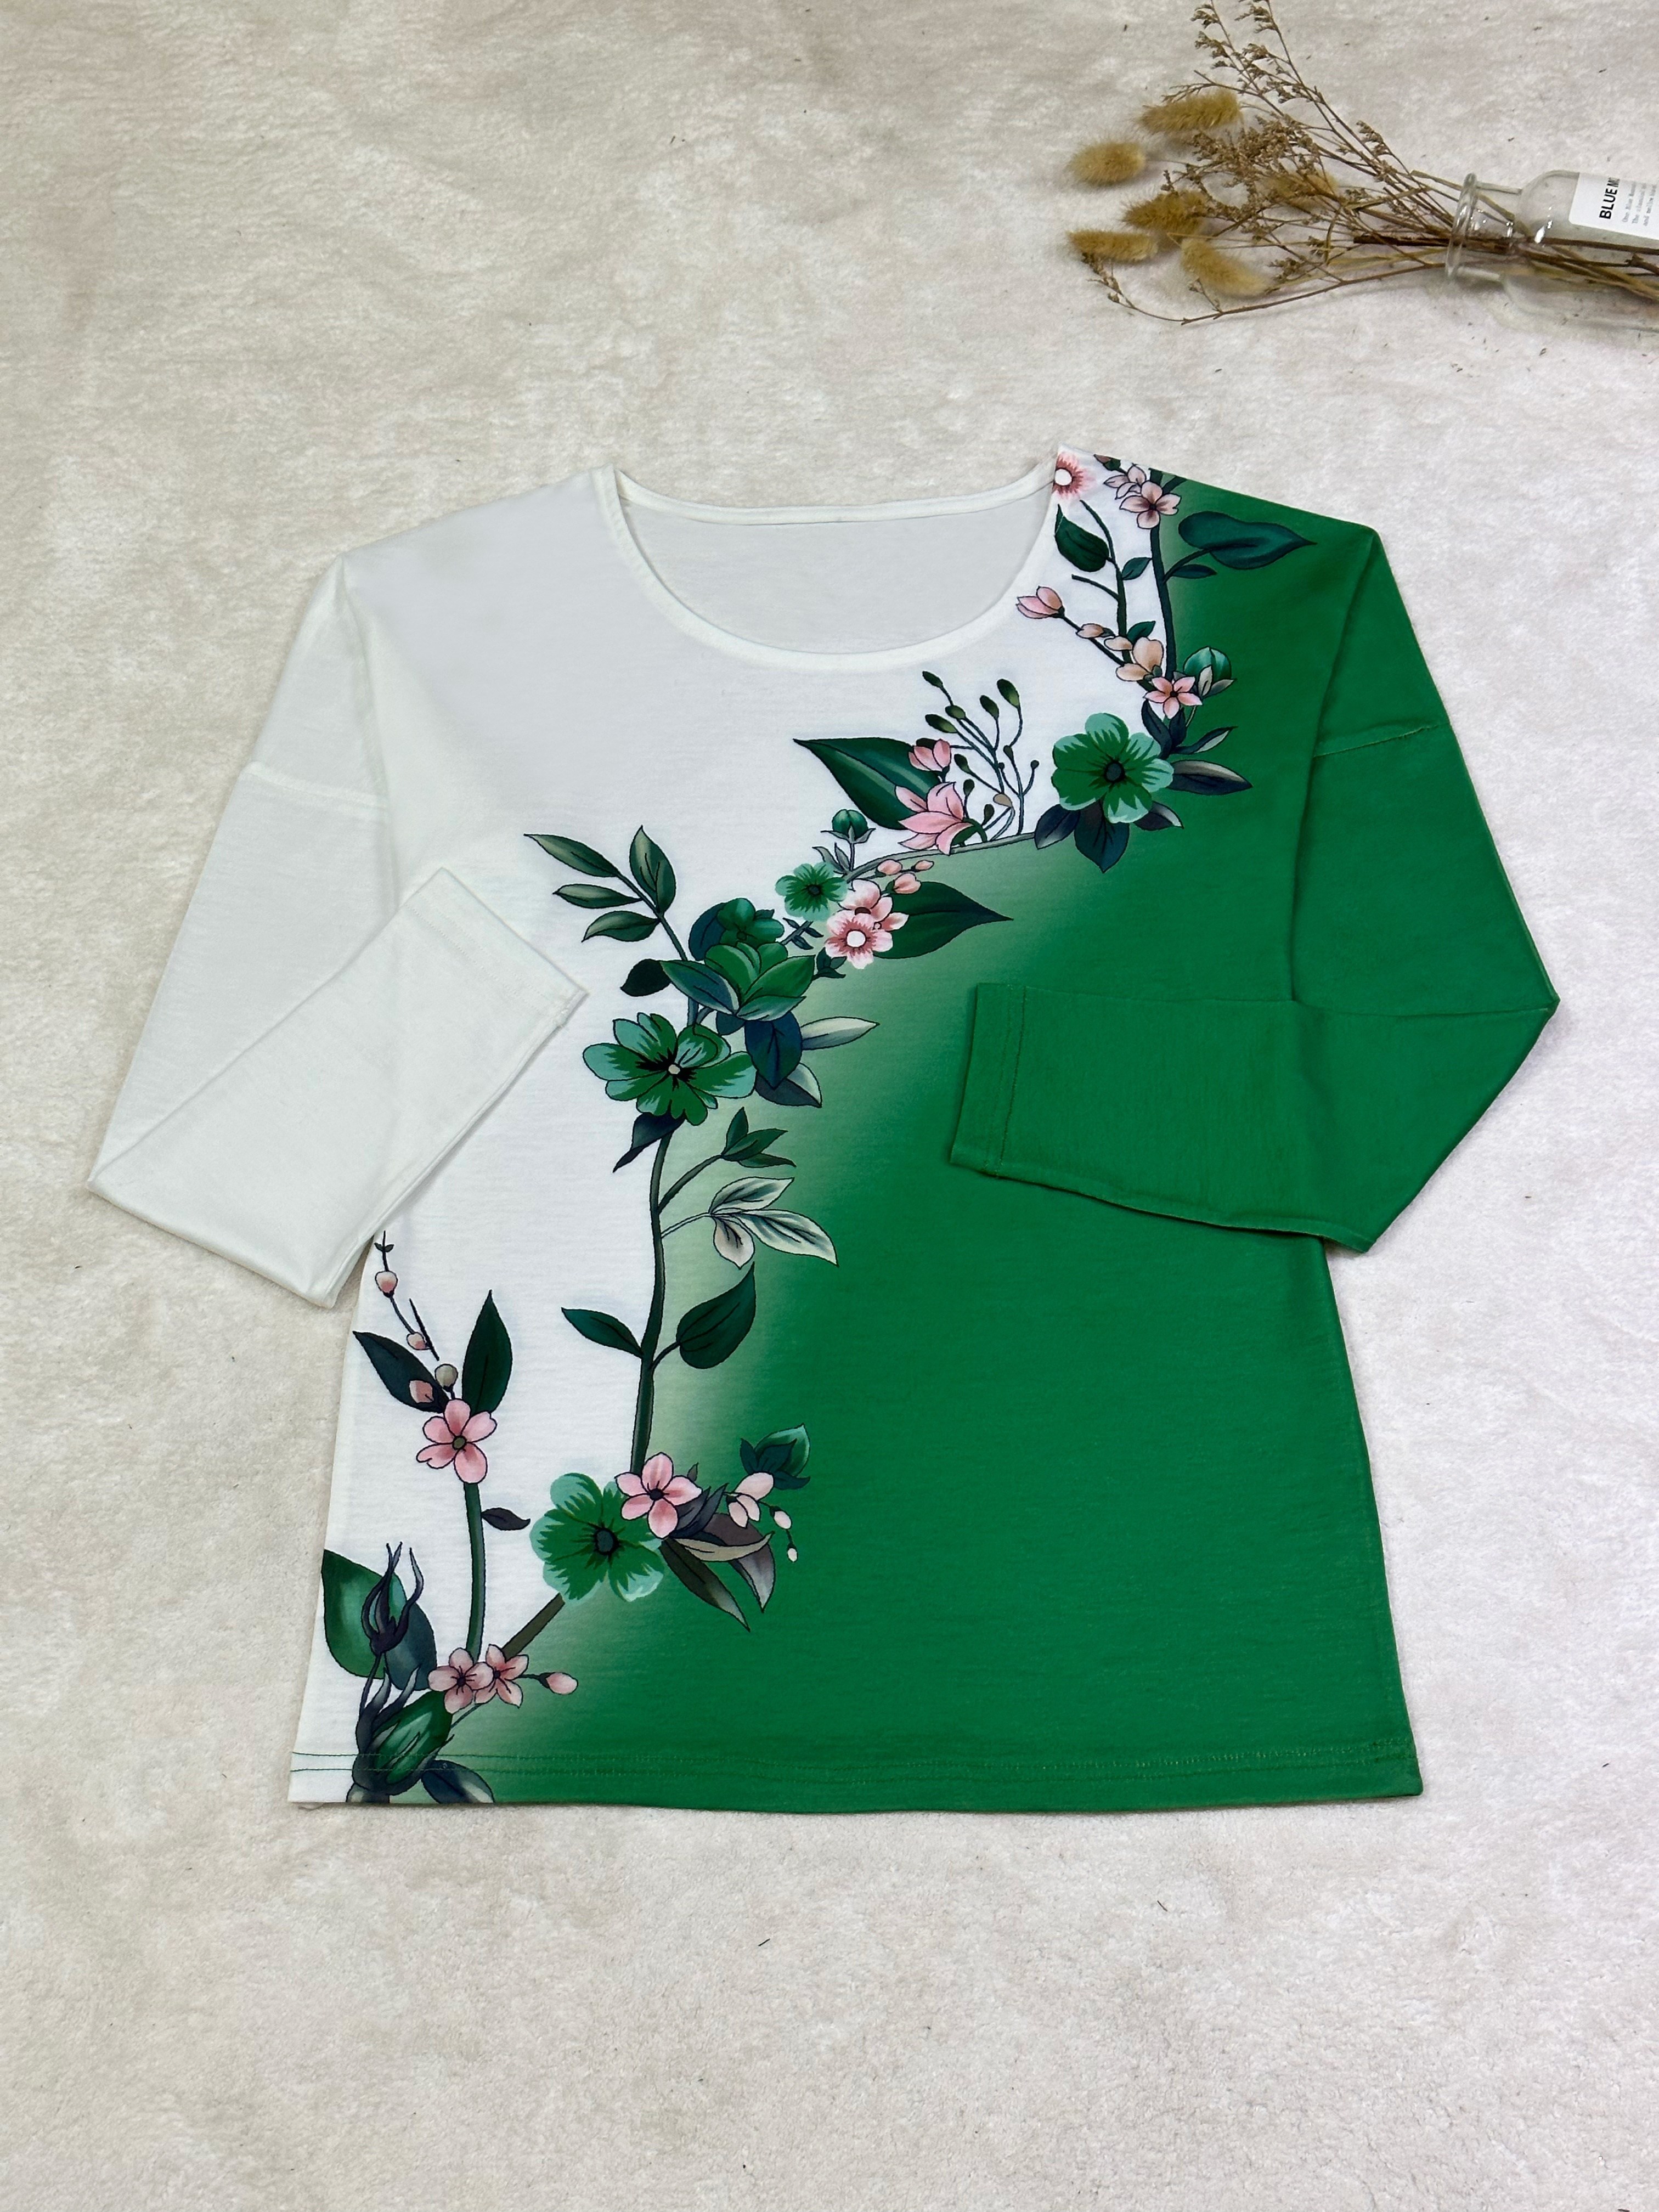 XFLWAM Womens Tops Long Sleeve Color Block Floral Shirt Casual